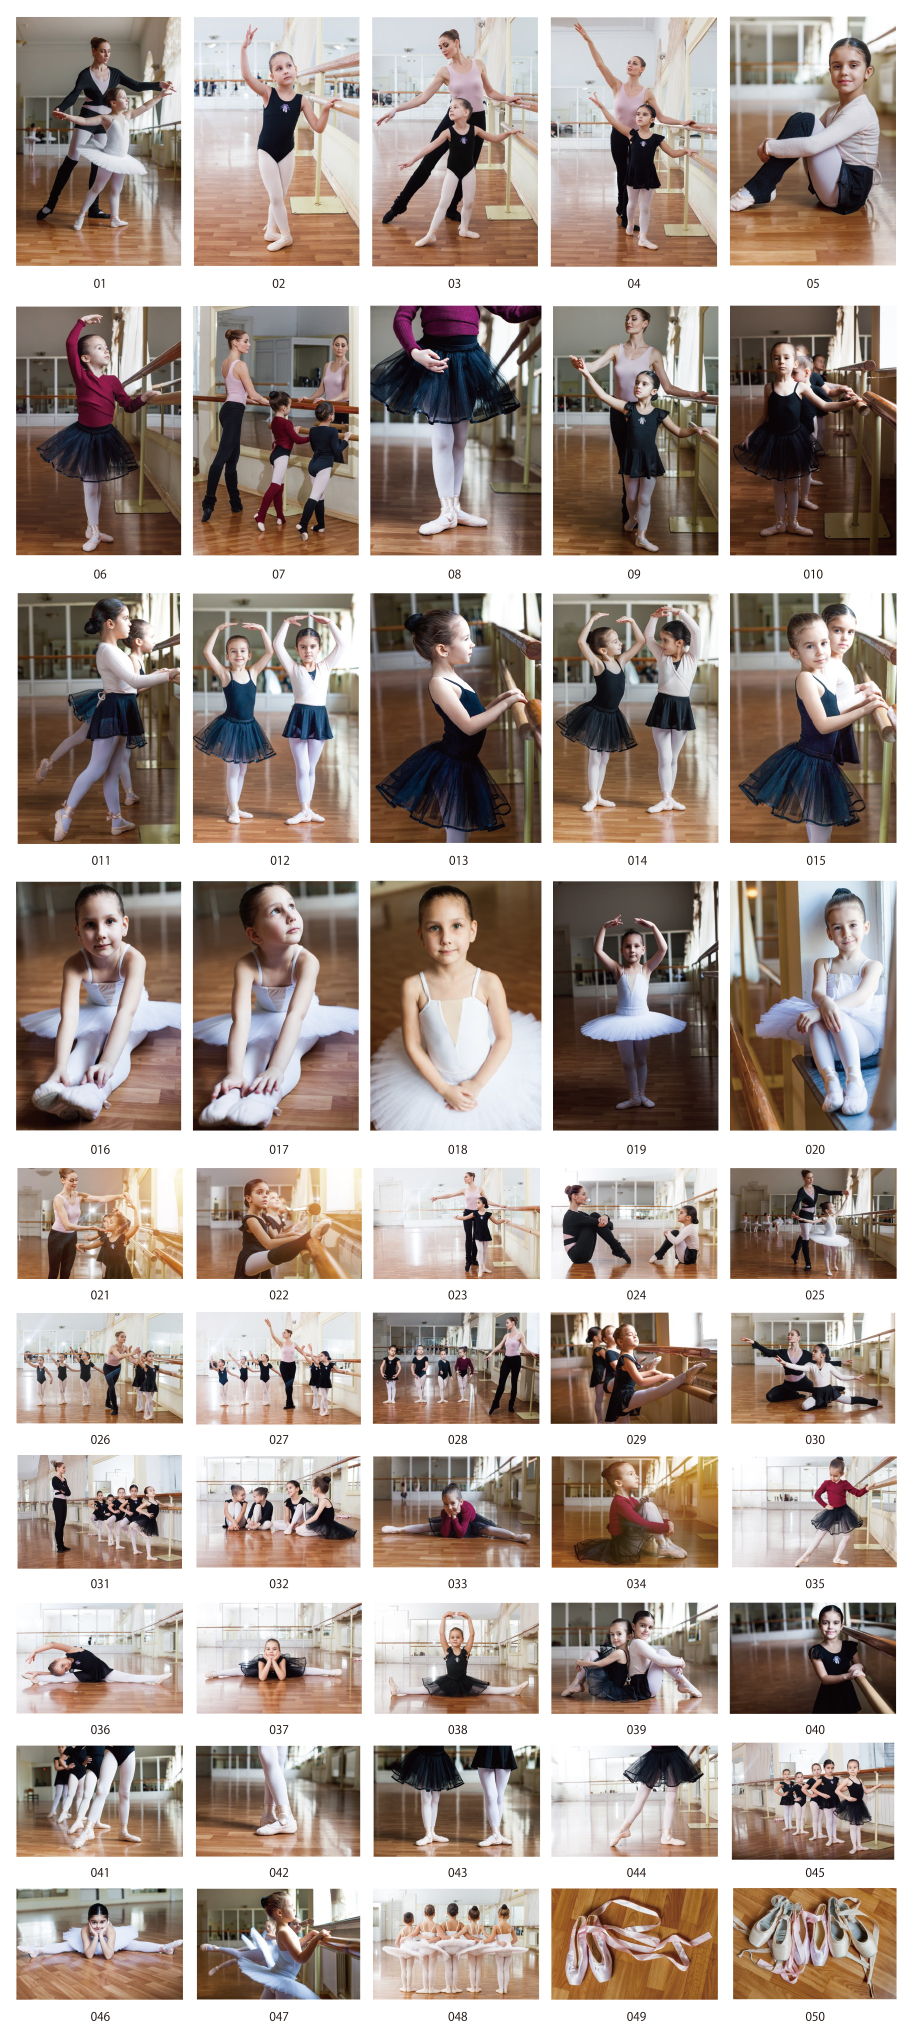 Balet photos vol.2